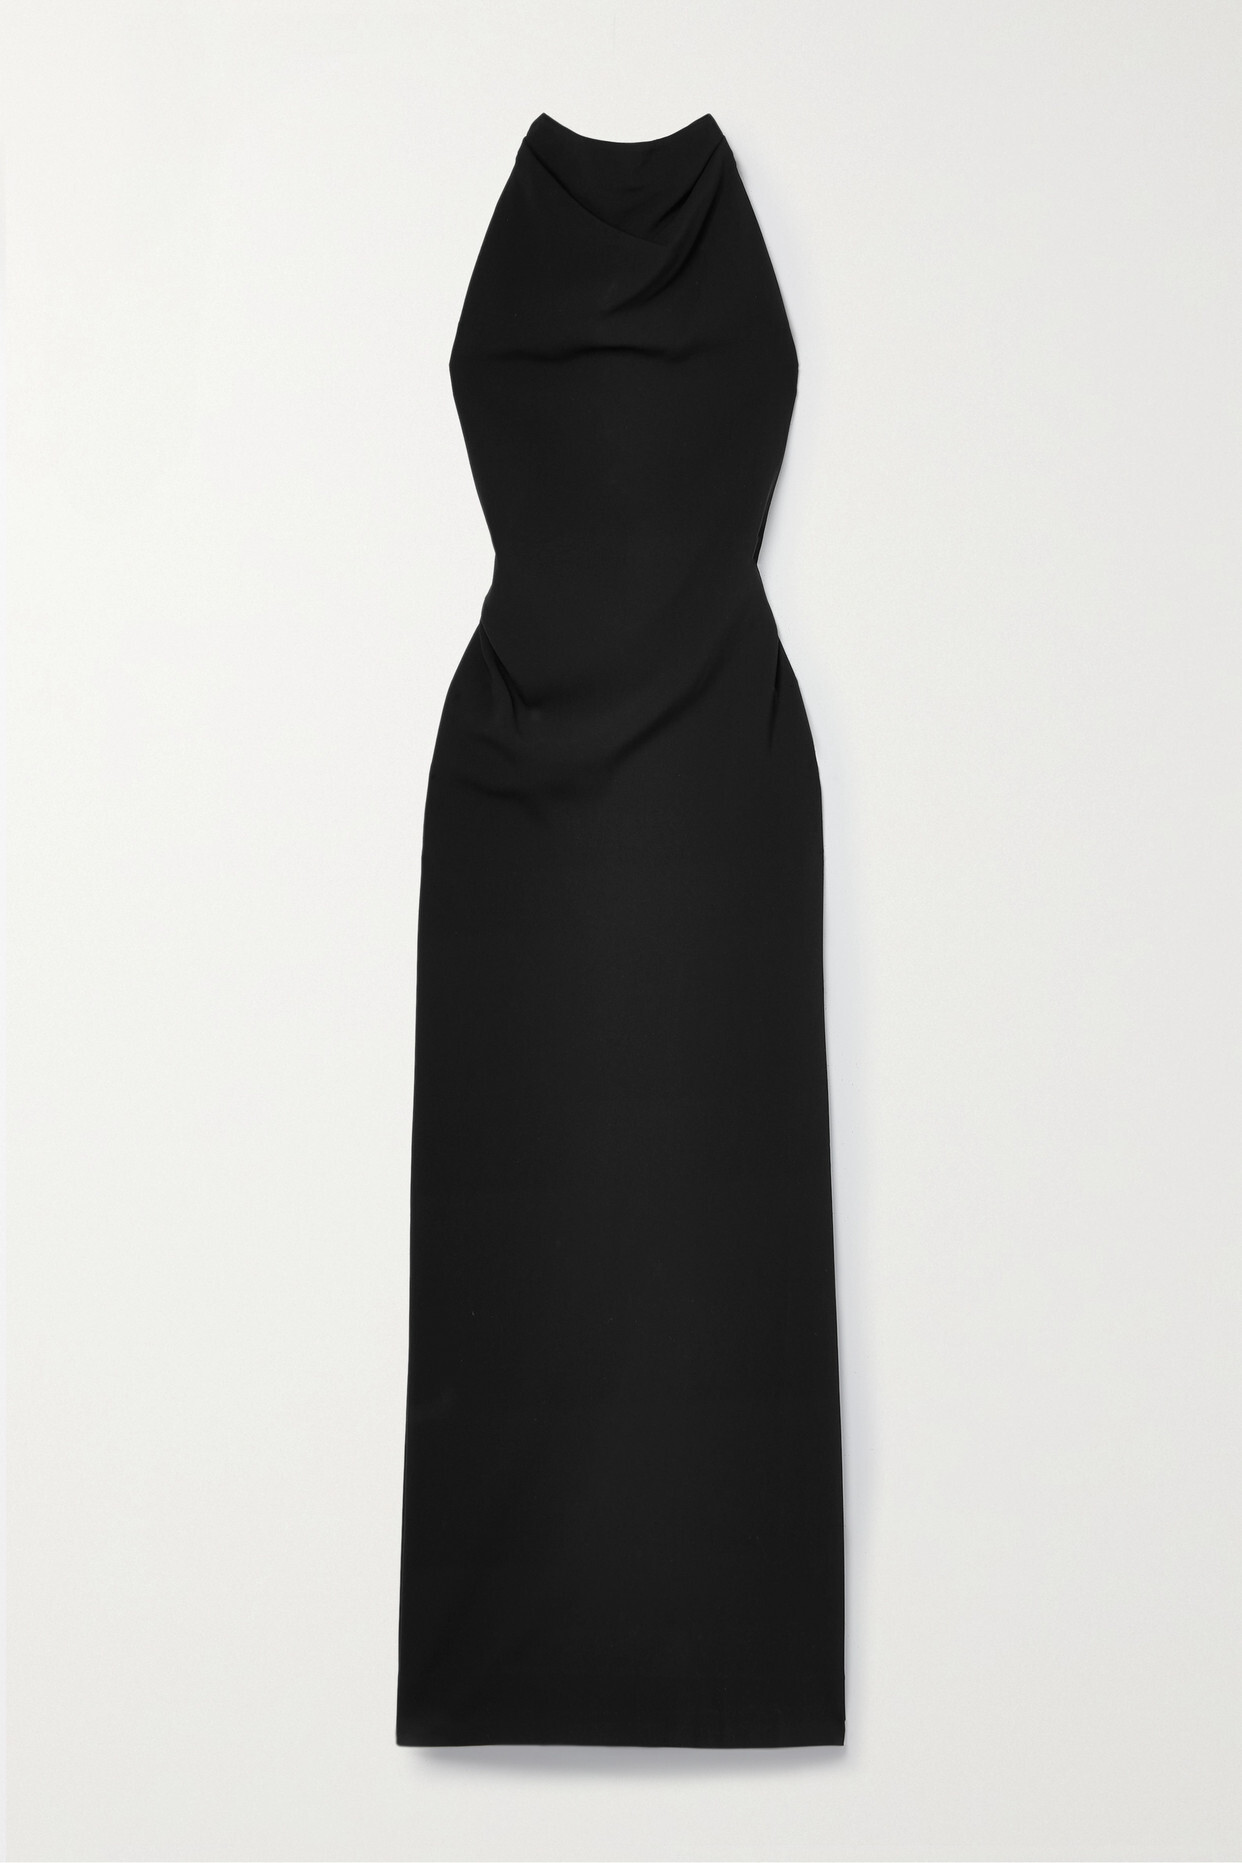 Proenza Schouler - Open-back Draped Crepe Maxi Dress - Black